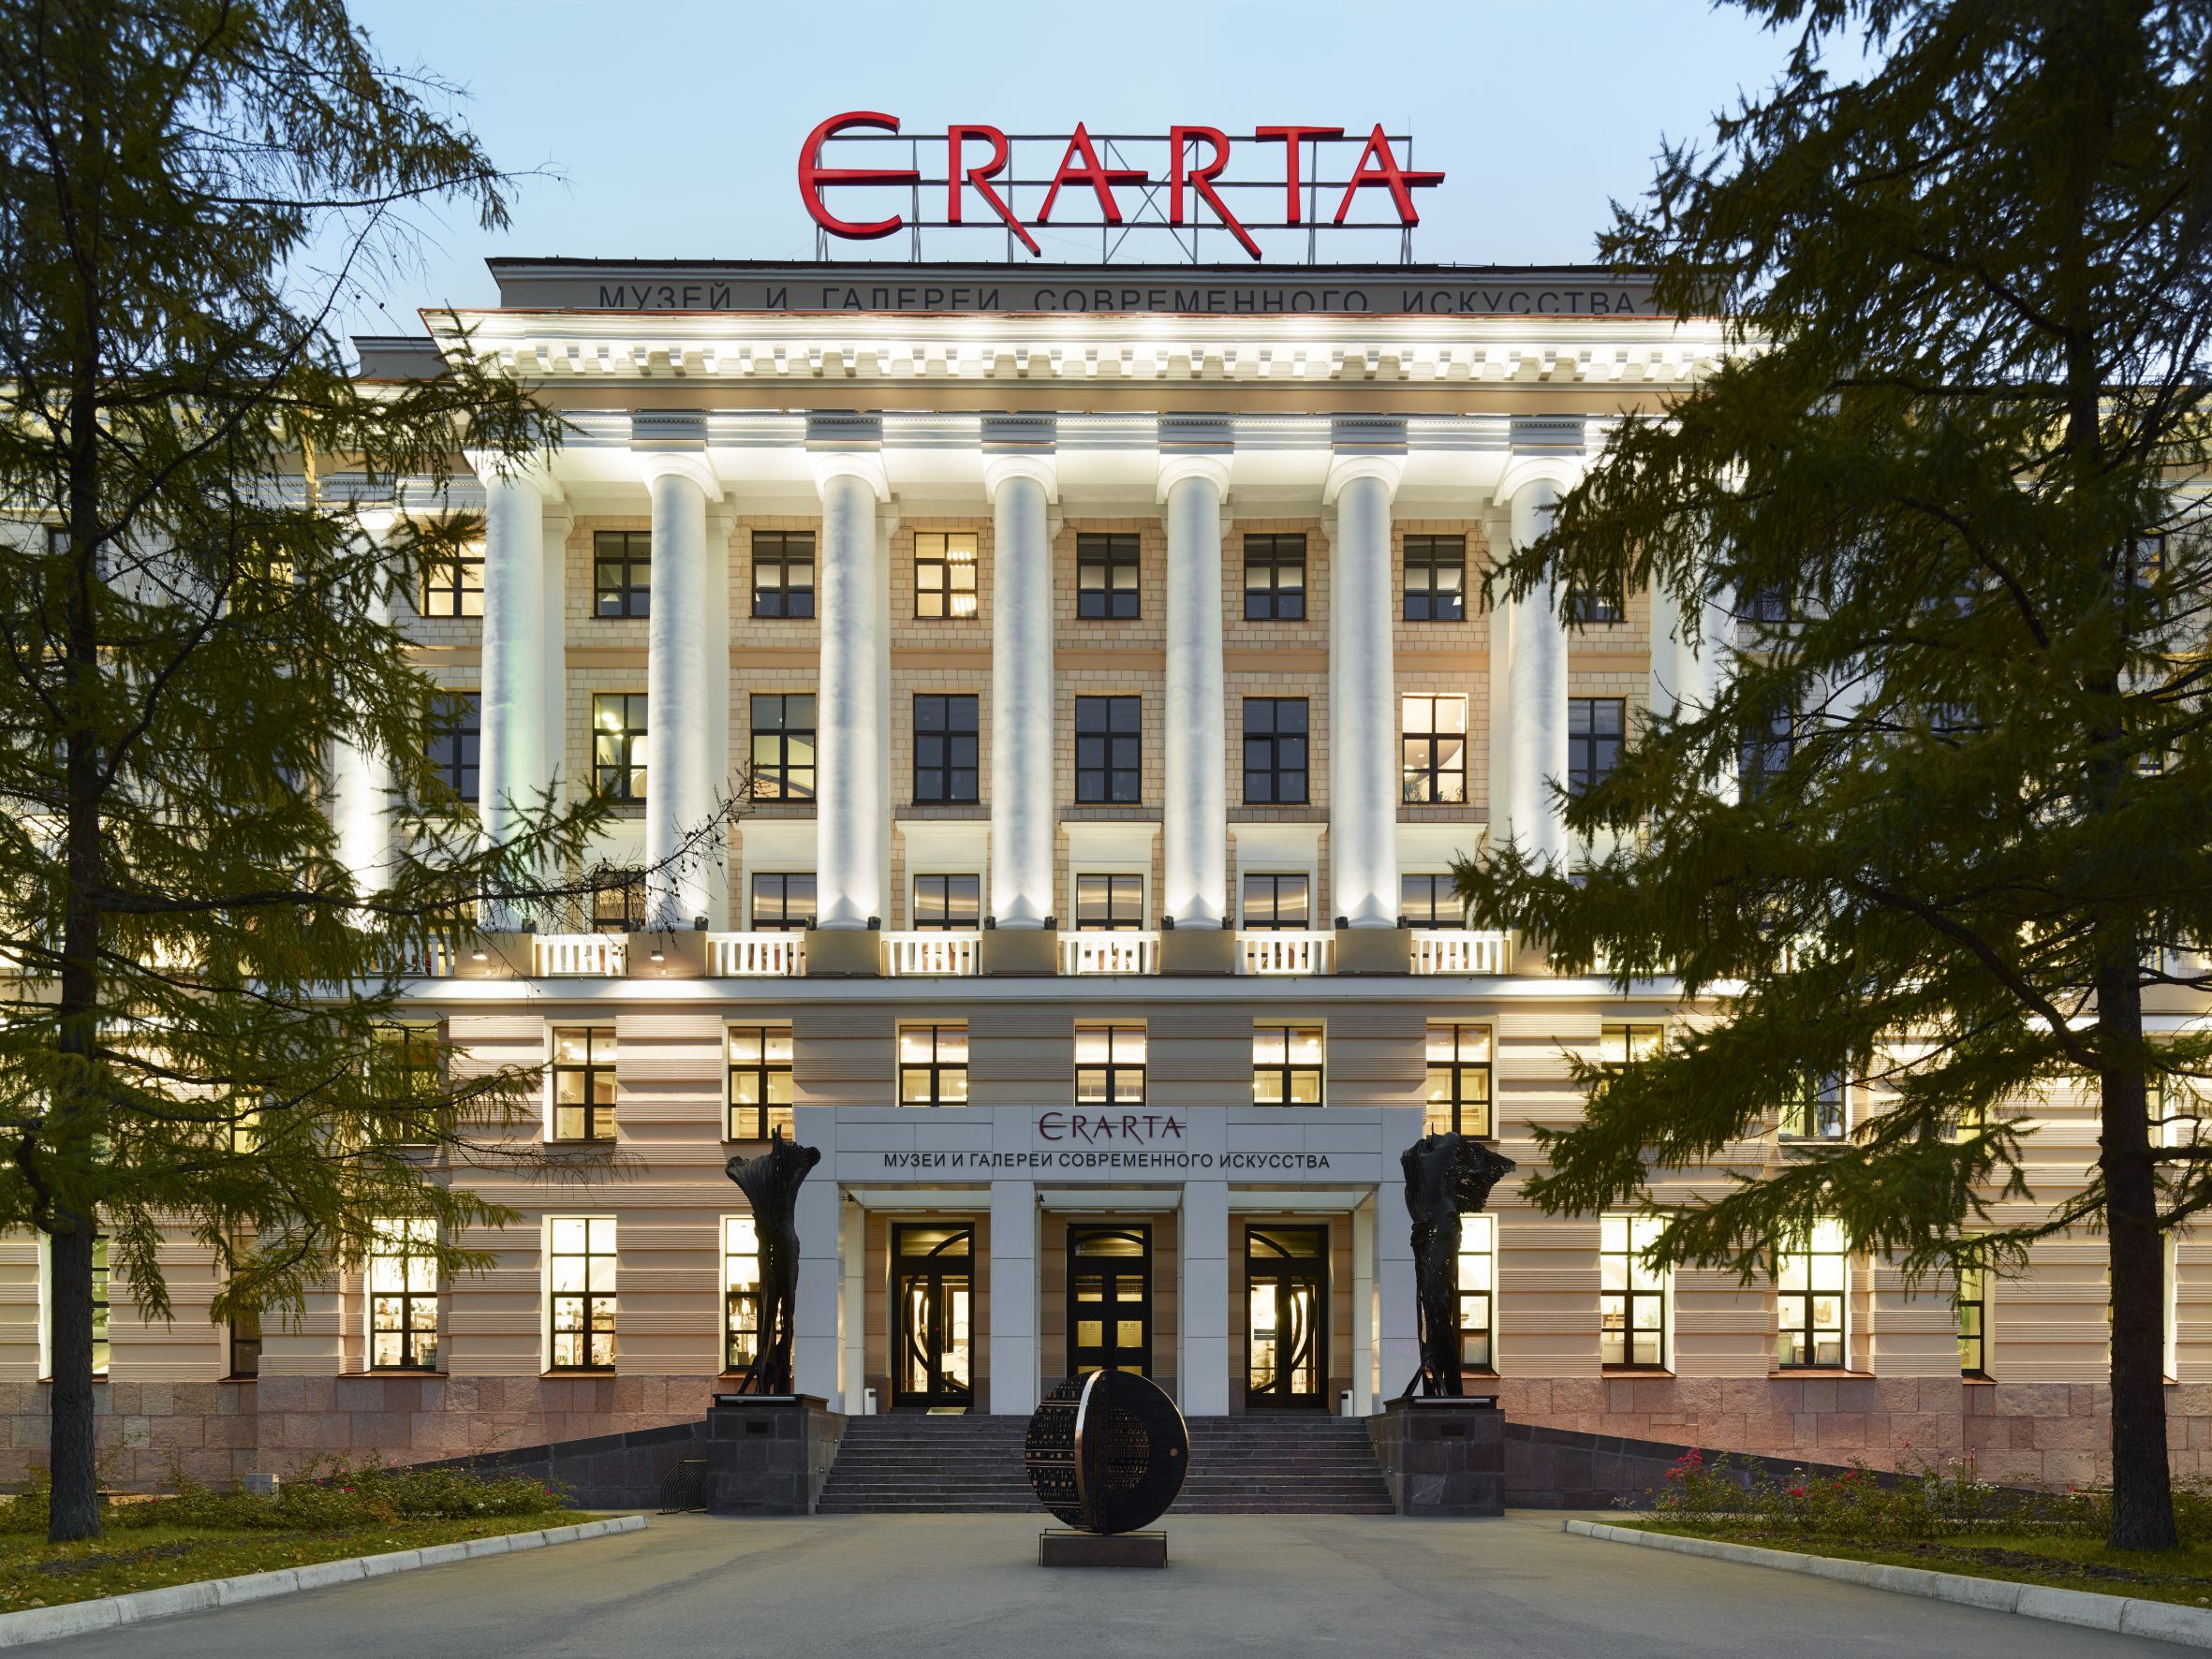 nora systems_Erarta_Museum of Contemporary Art_St. Petersburg